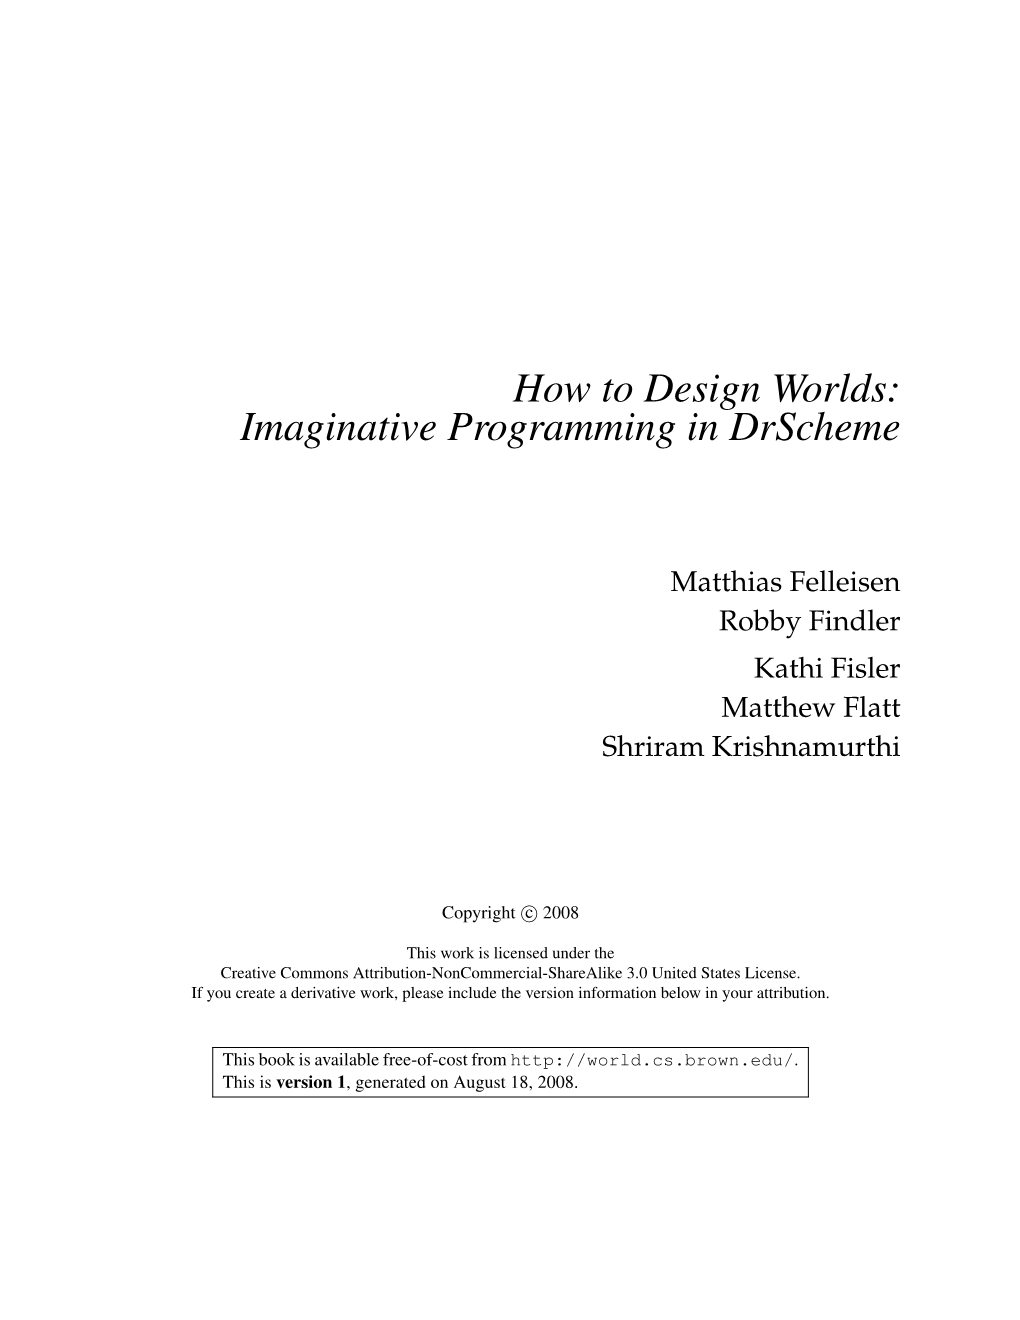 Imaginative Programming in Drscheme